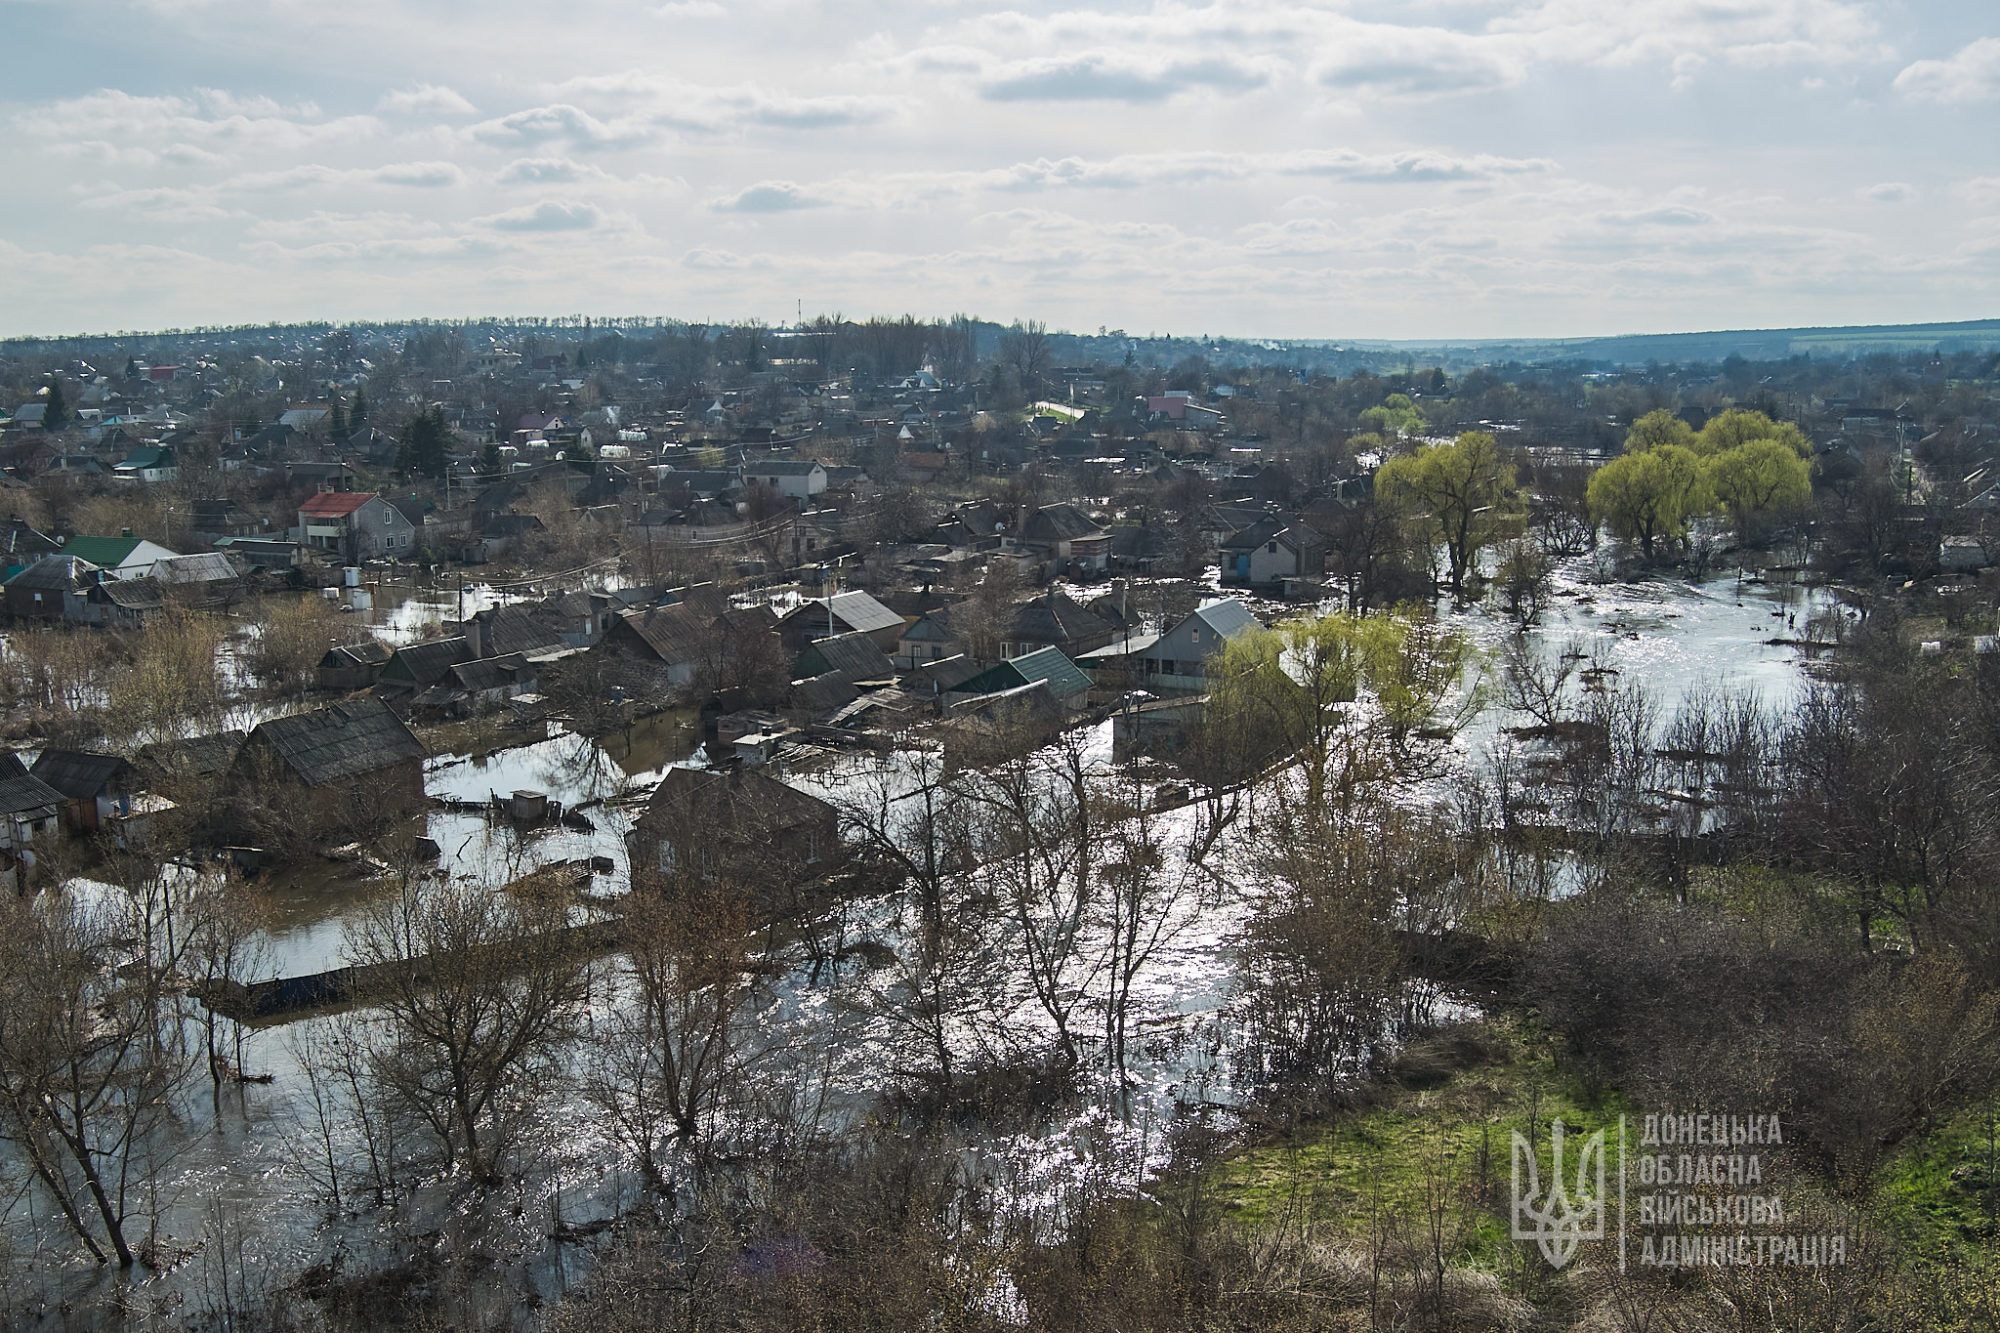 Из-за прорыва дамбы под Краматорском затопило около 260 домов на 30 улицах, — глава области (ФОТО) 1